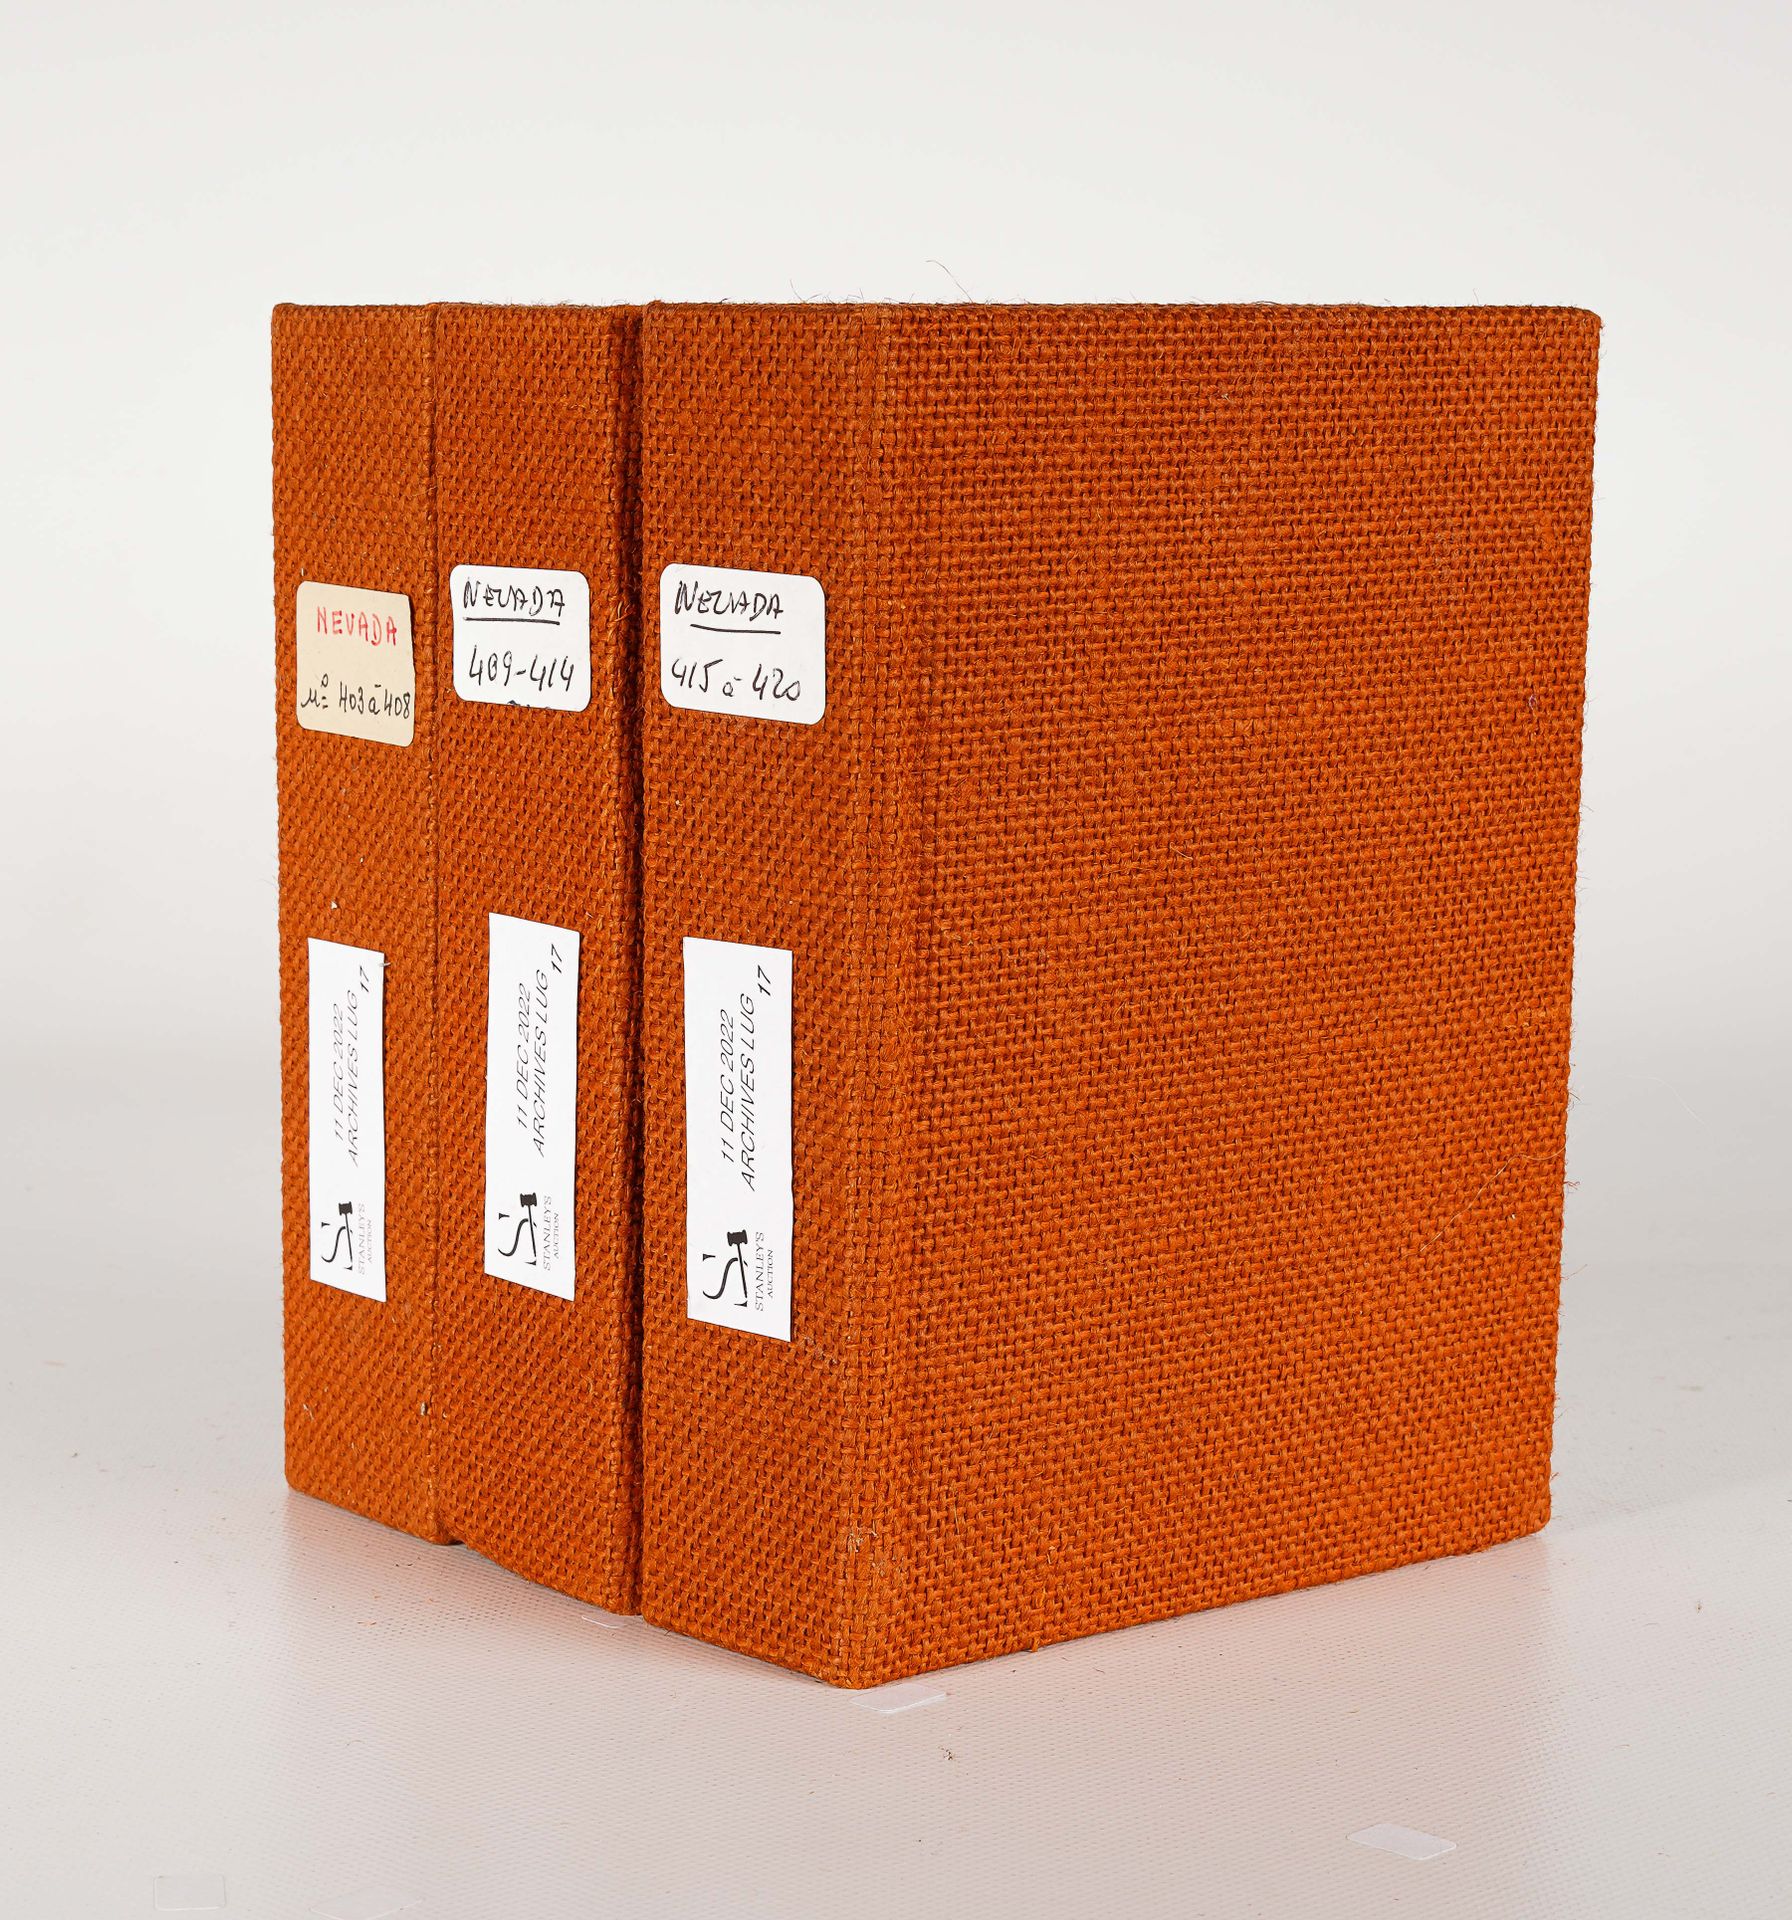 LUG SEMIC, ARCHIVES COMICS 三个LUG活页夹，包括NEVADA第403至420号，橙色布，尺寸H 18 x 13厘米